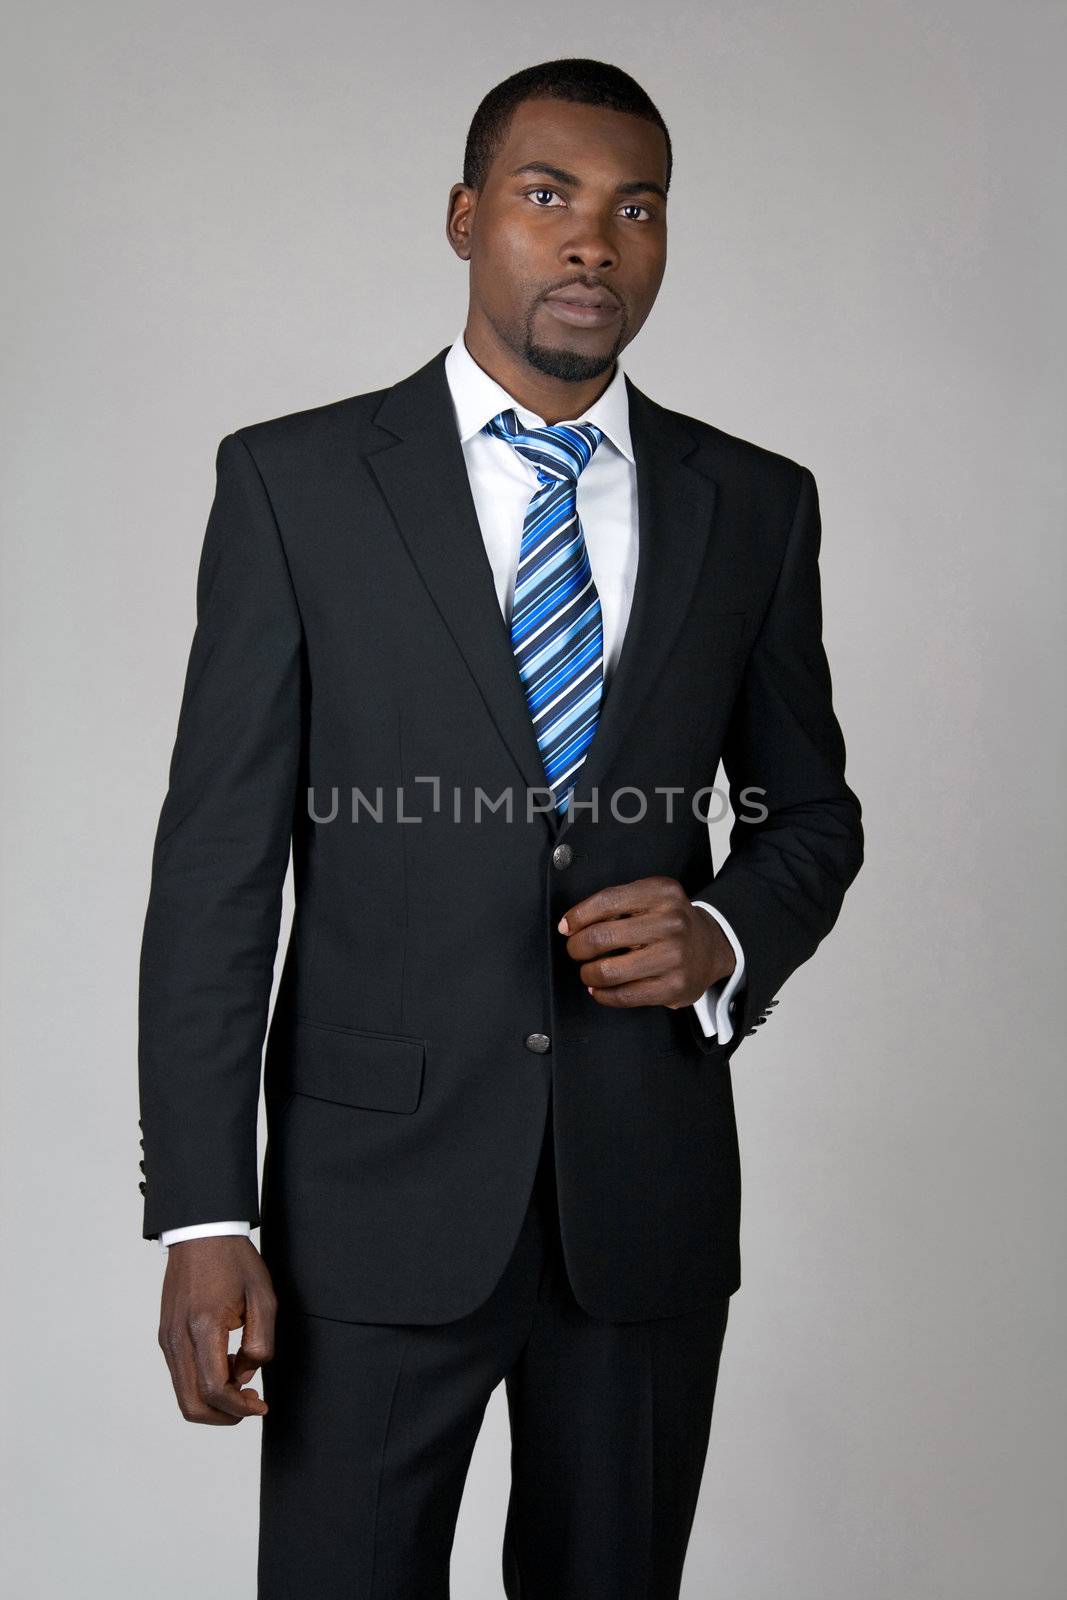 Gentleman wearing suit and tie by anikasalsera